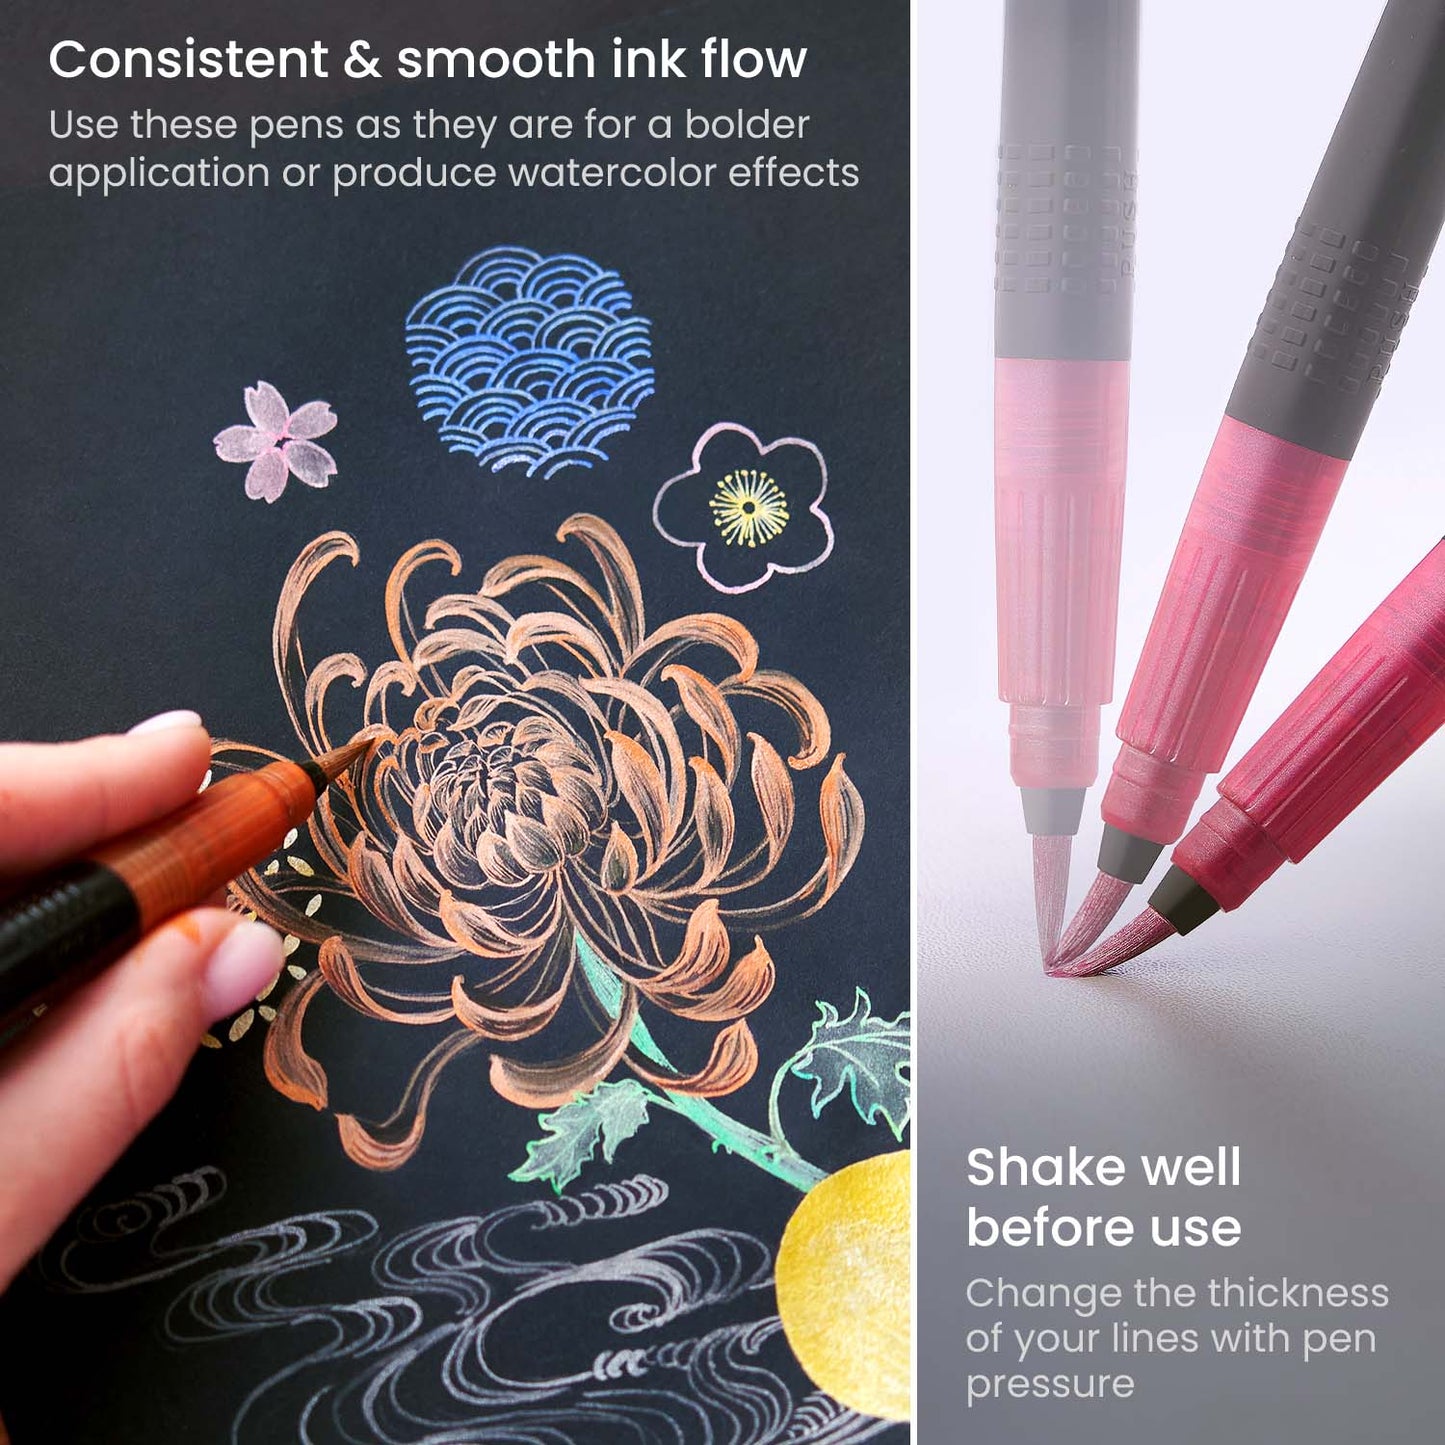 Real Brush Pens® Metallic Liquid Ink - Set of 16